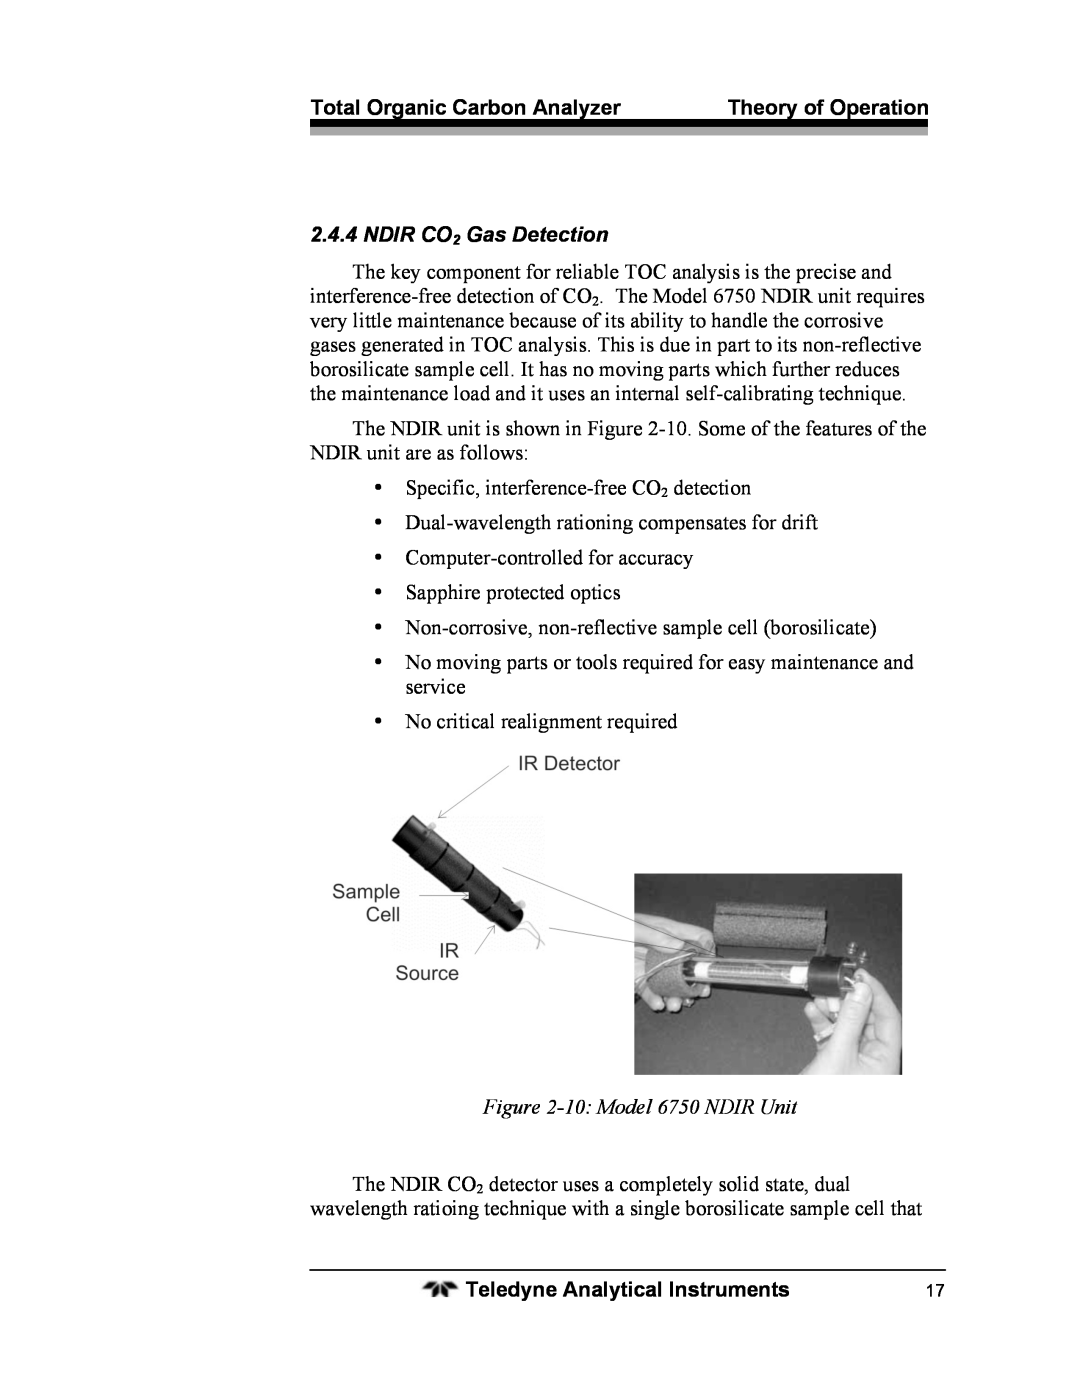 Teledyne operating instructions NDIR CO2 Gas Detection, 10:Model 6750 NDIR Unit 